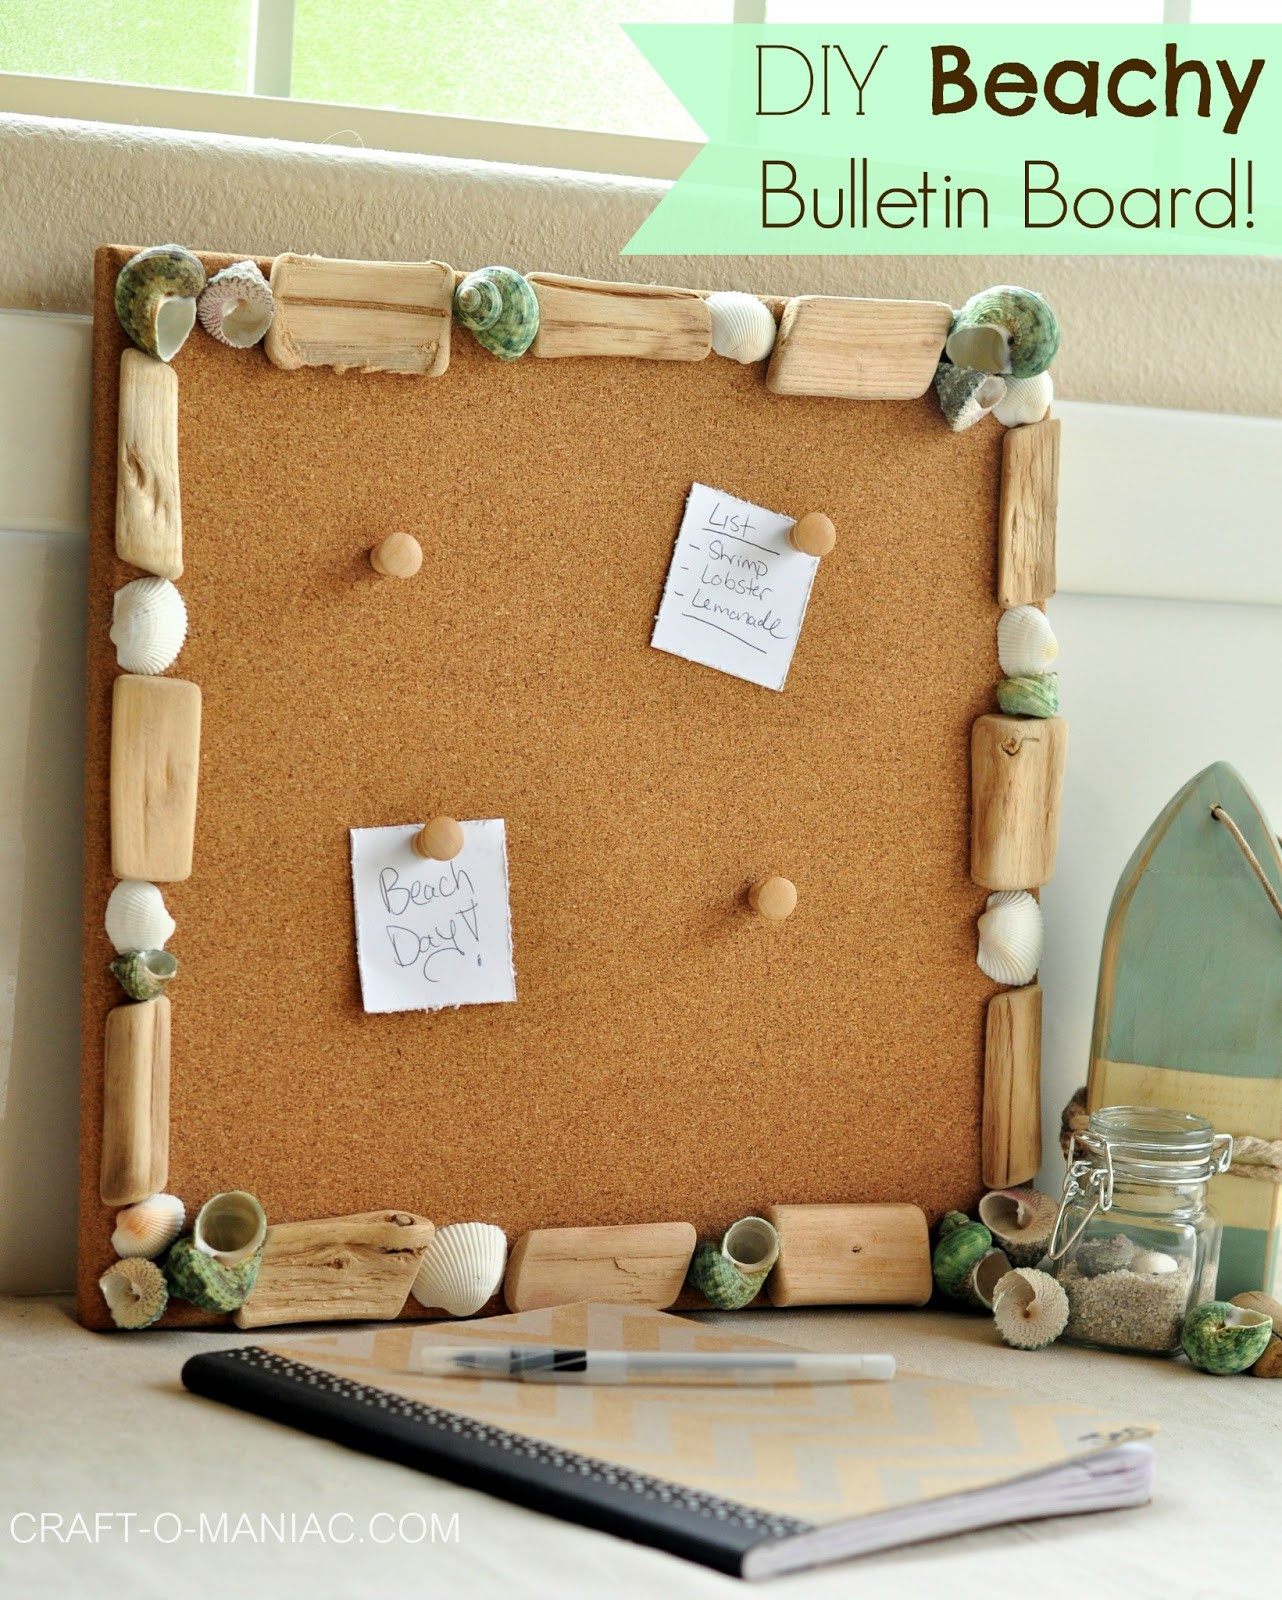 Best ideas about DIY Bulletin Board
. Save or Pin DIY Beachy Bulletin Board Craft O Maniac Now.